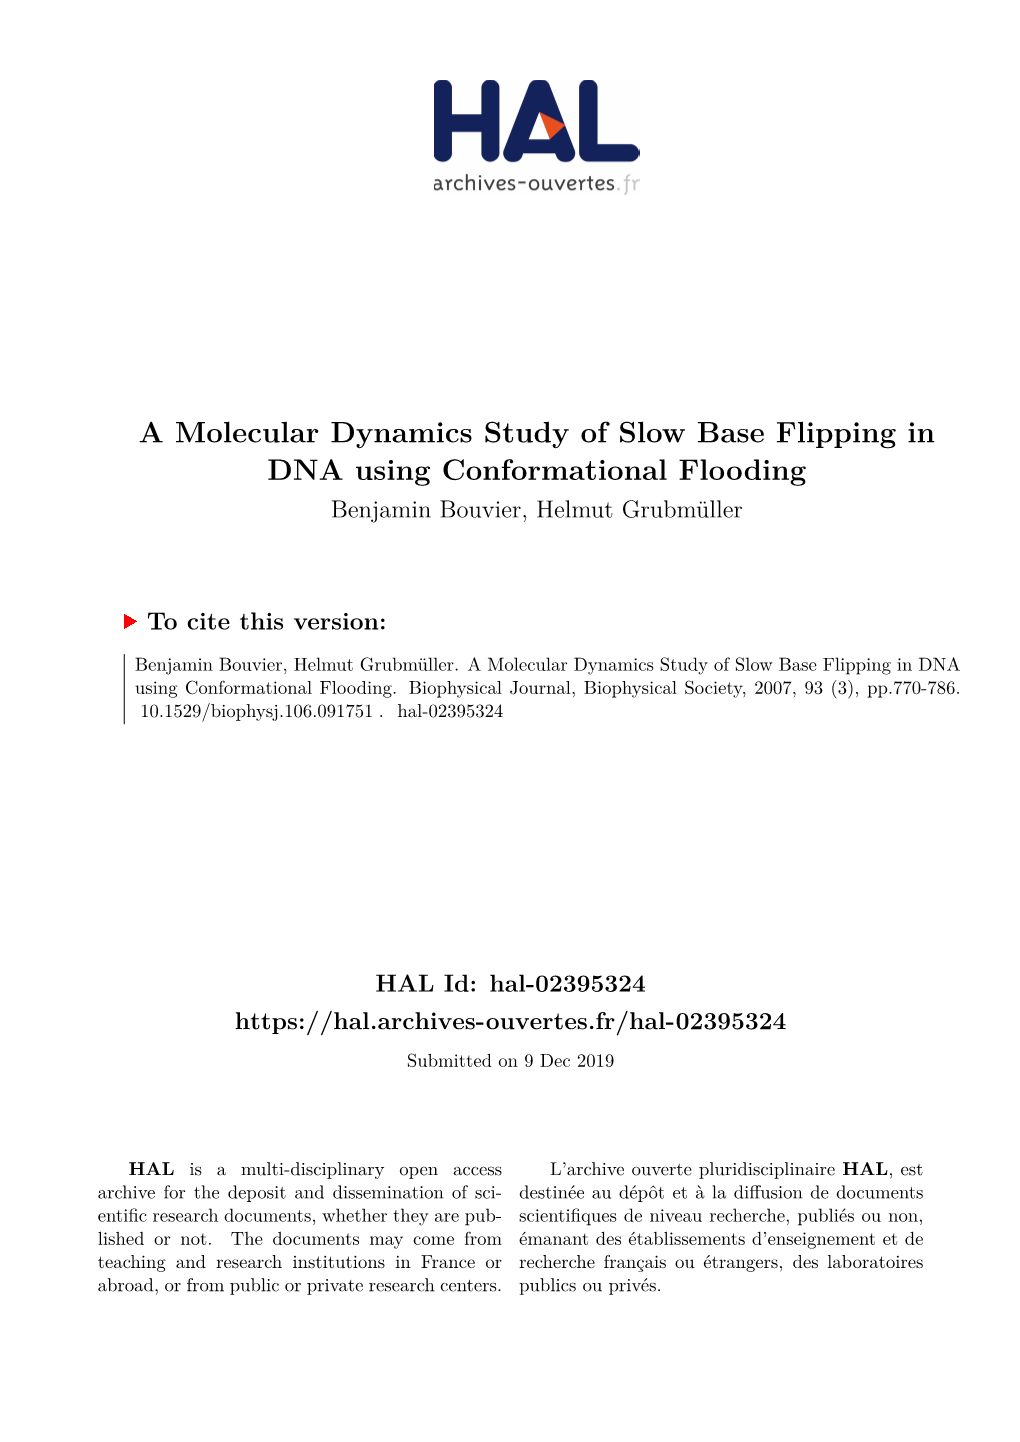 A Molecular Dynamics Study of Slow Base Flipping in DNA Using Conformational Flooding Benjamin Bouvier, Helmut Grubmüller